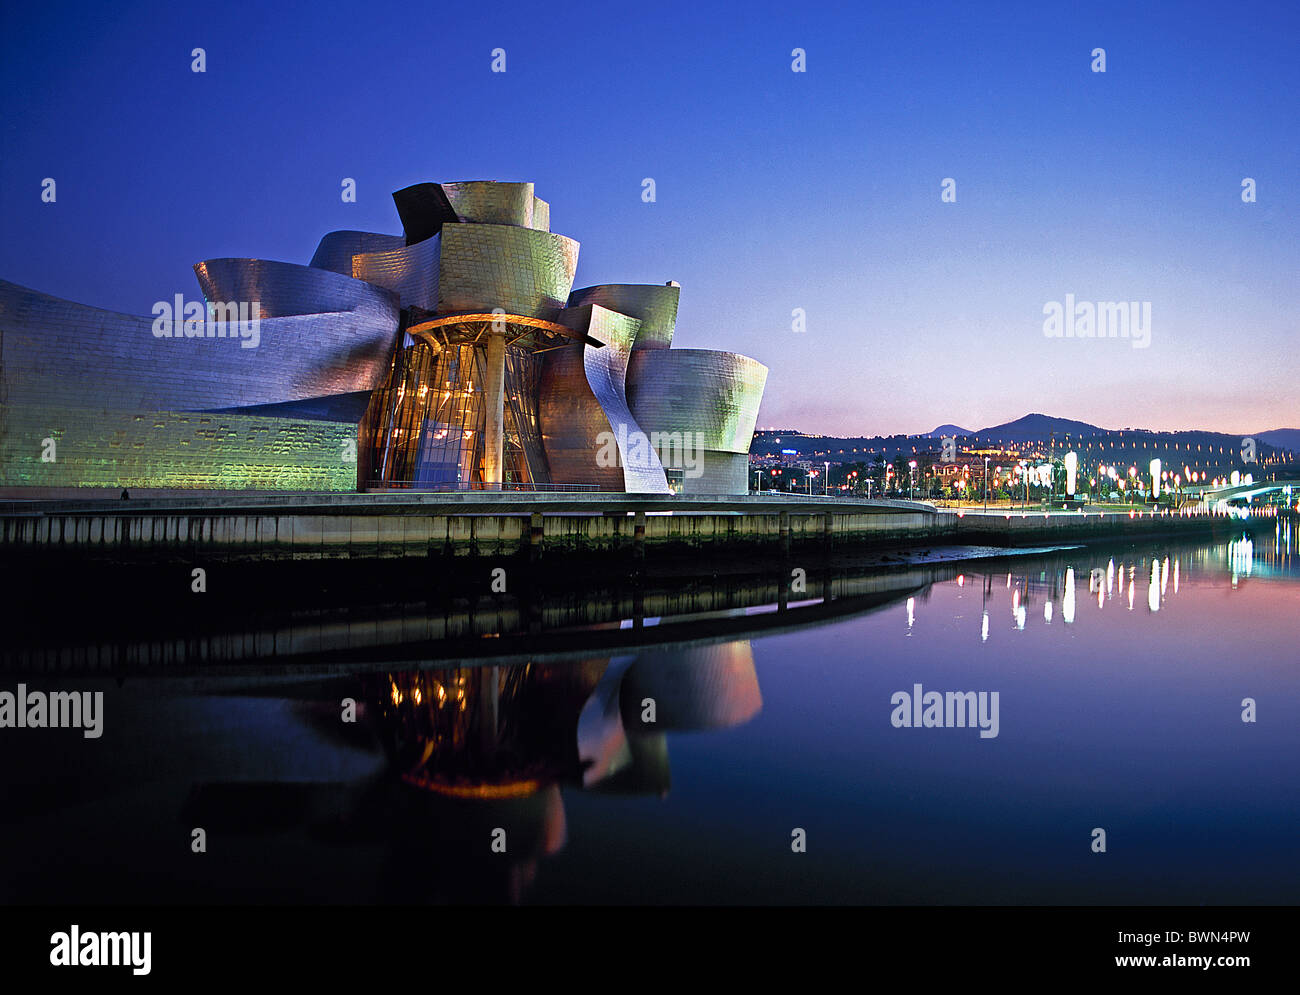 Spain Europe Bilbao city Guggenheim museum art at night twilight illuminated illumination reflections water Stock Photo